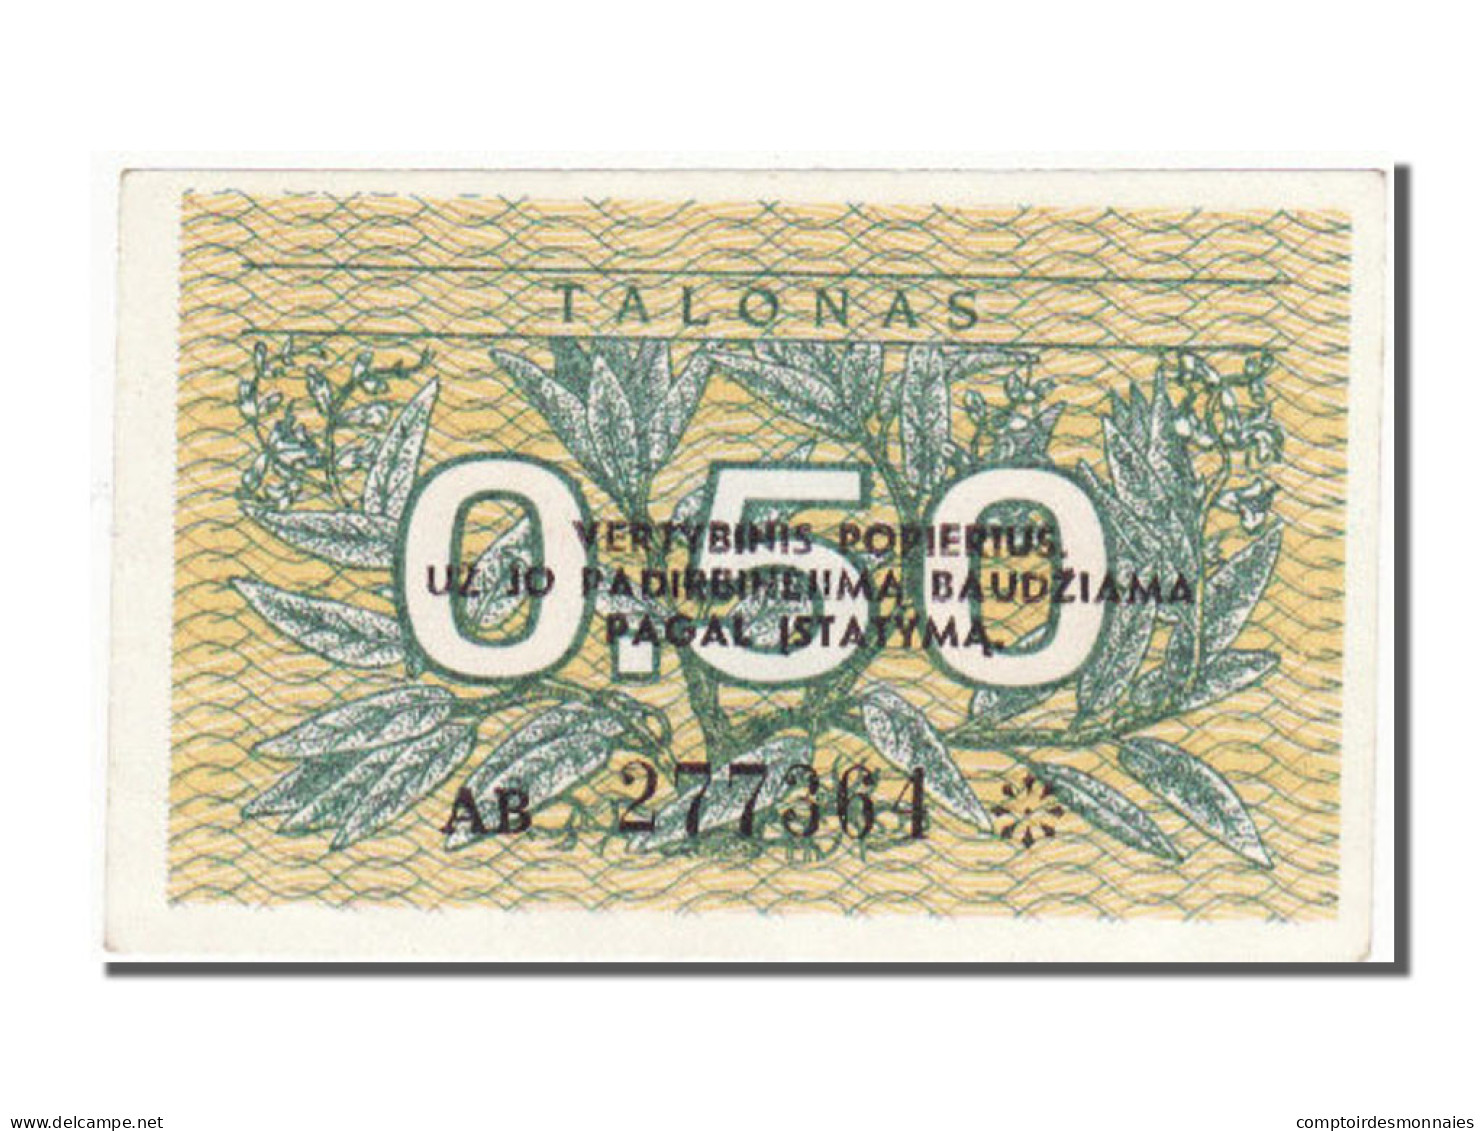 Billet, Lithuania, 0.50 Talonas, 1991, NEUF - Lituanie